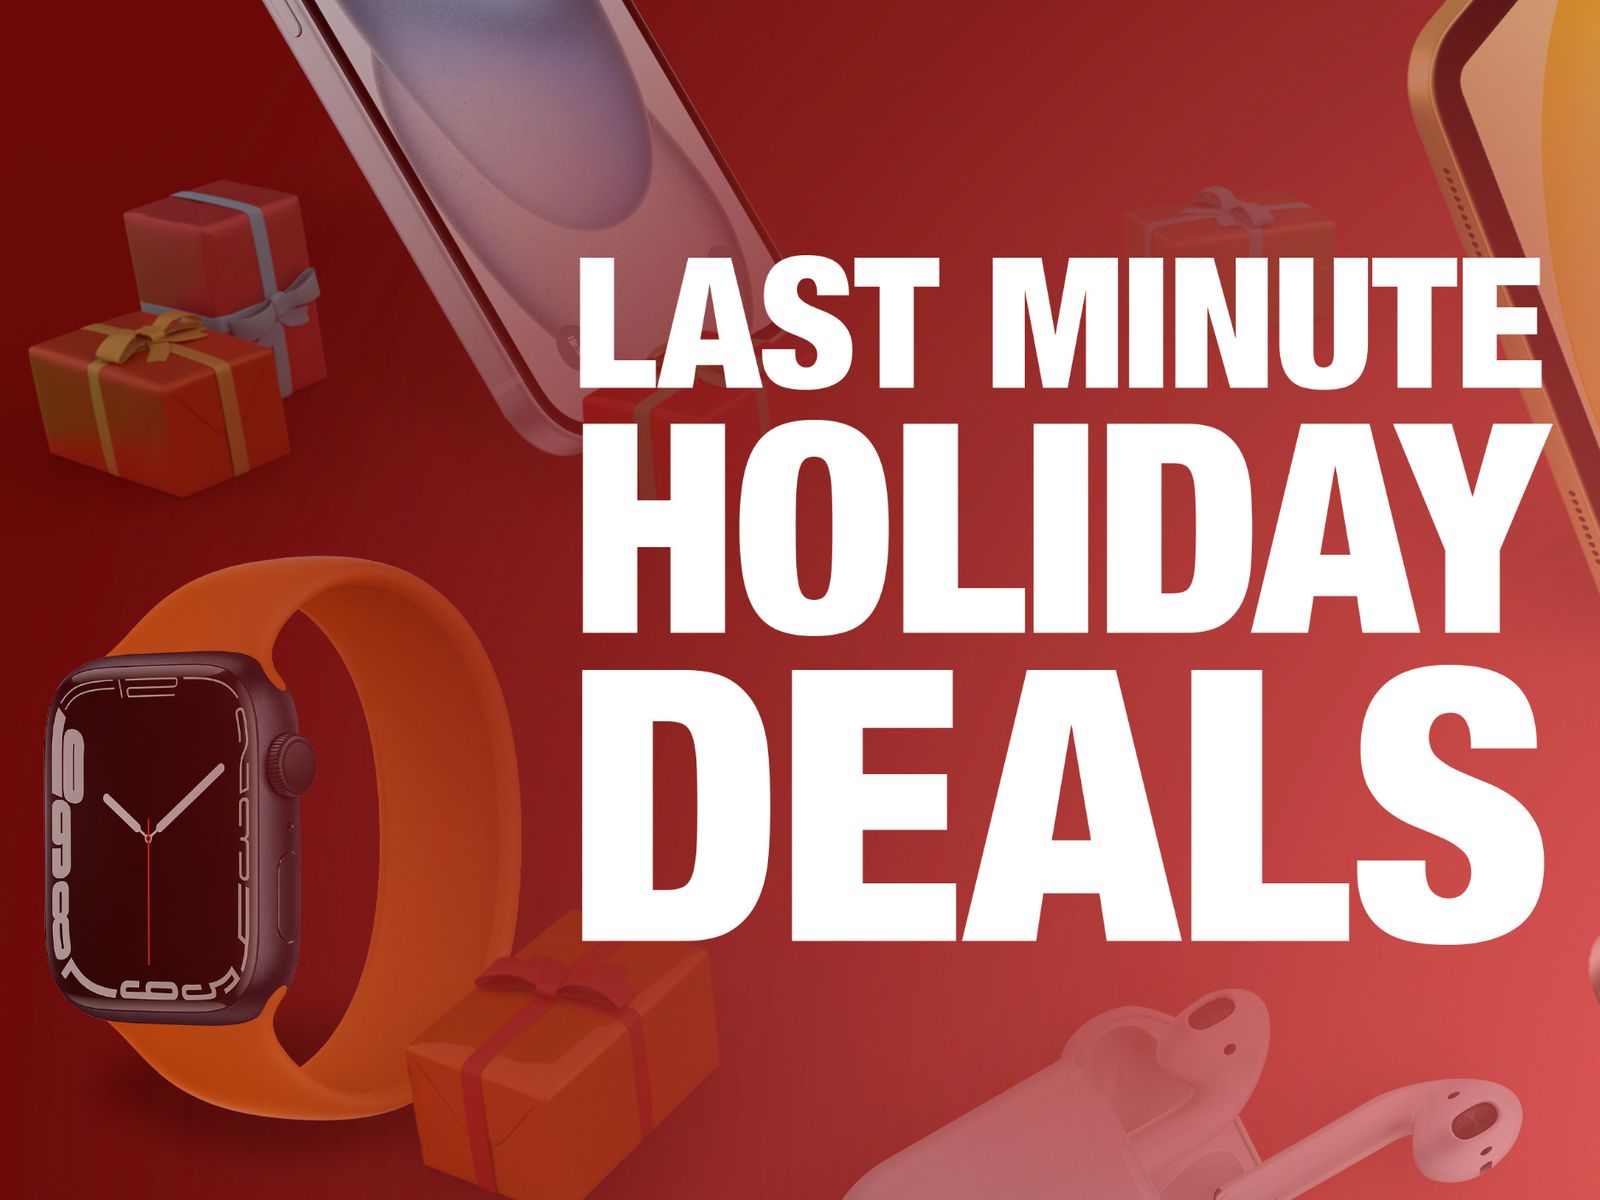 HomePod mini sees rare discount ahead of Christmas